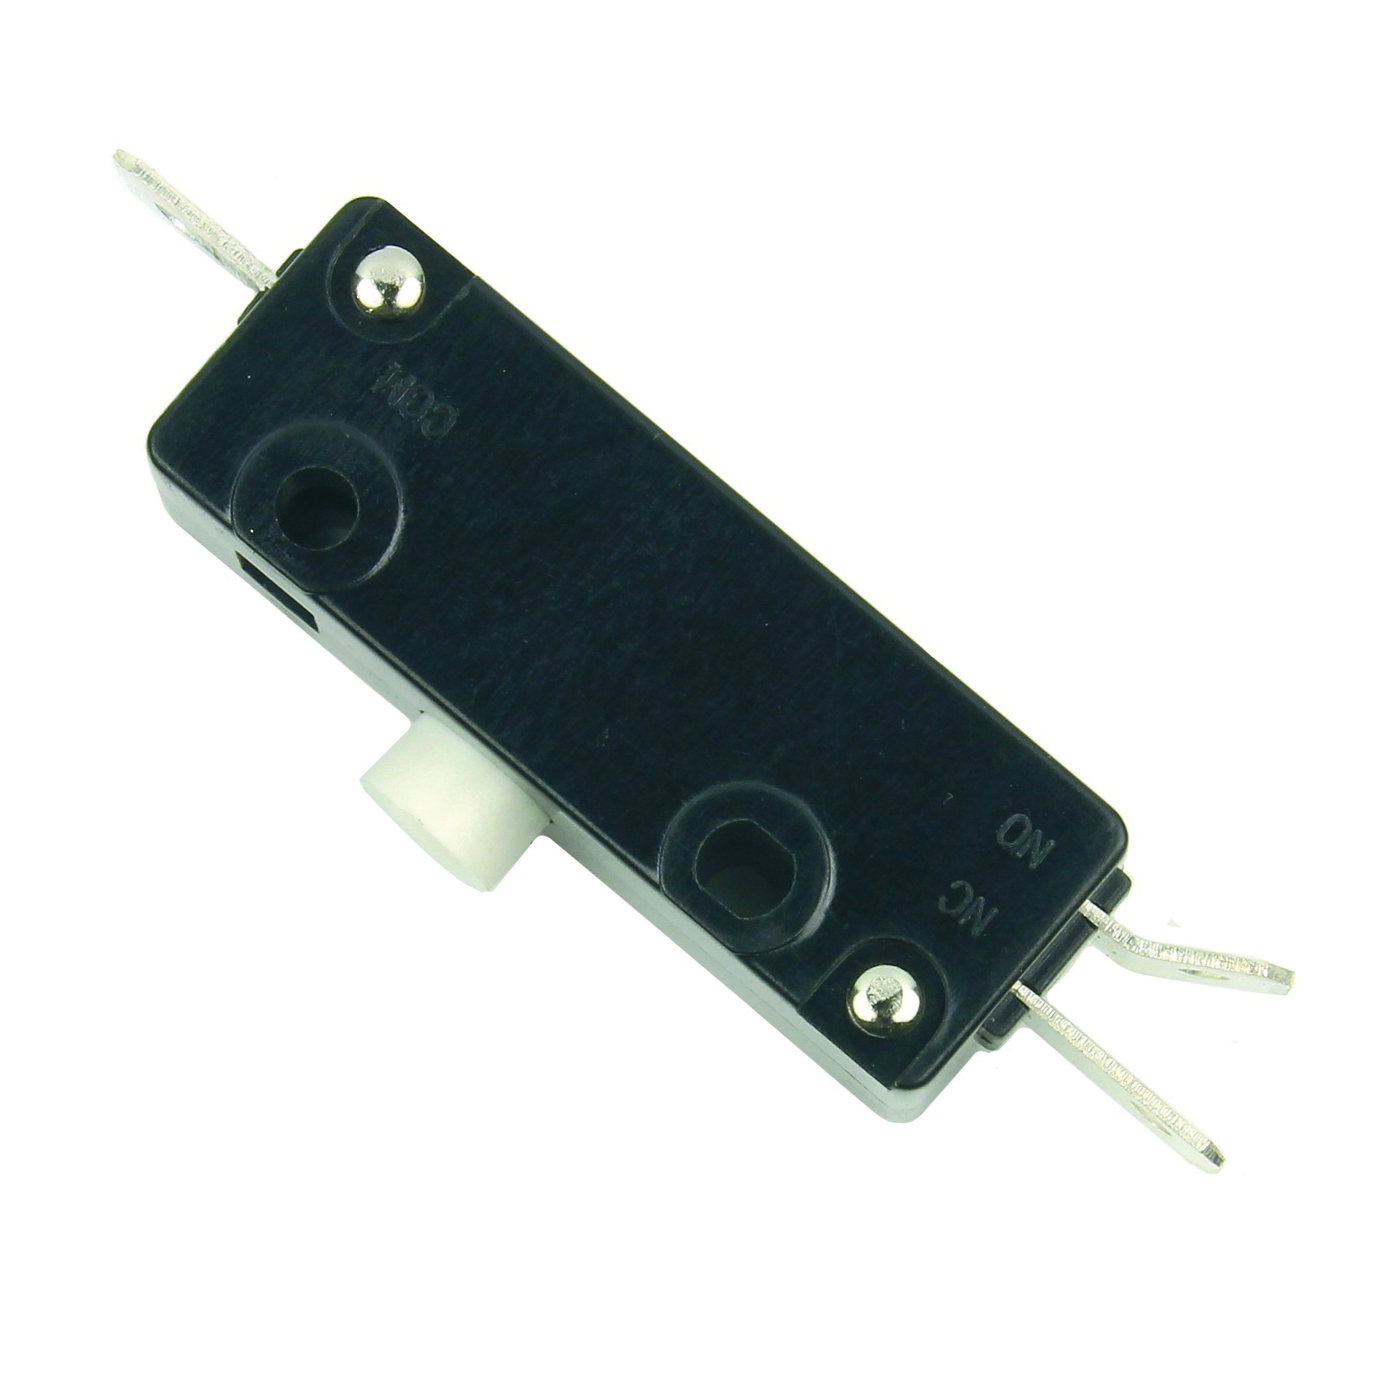 61030 Switch, 15/18 A, 125/250 V, SPST, Tab Terminal